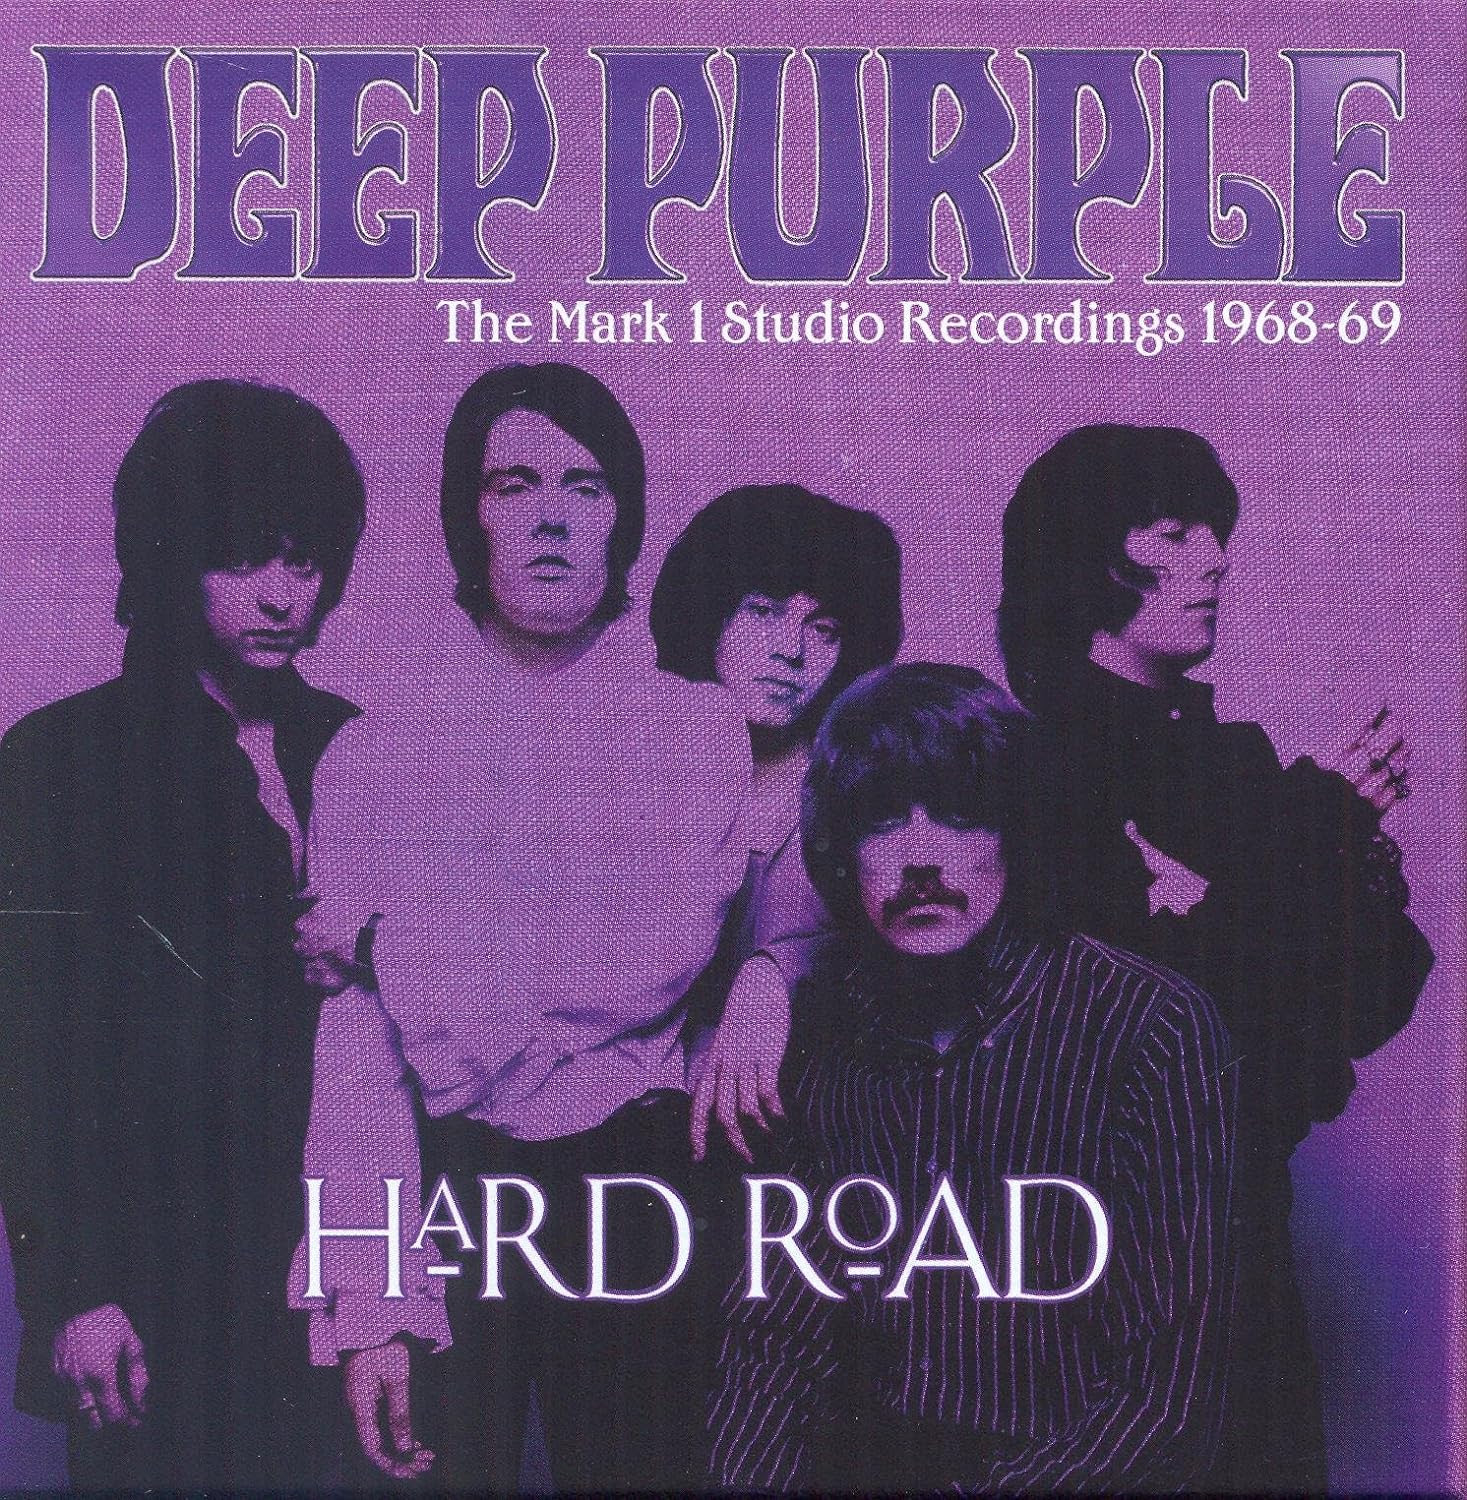 My Collections: Deep Purple